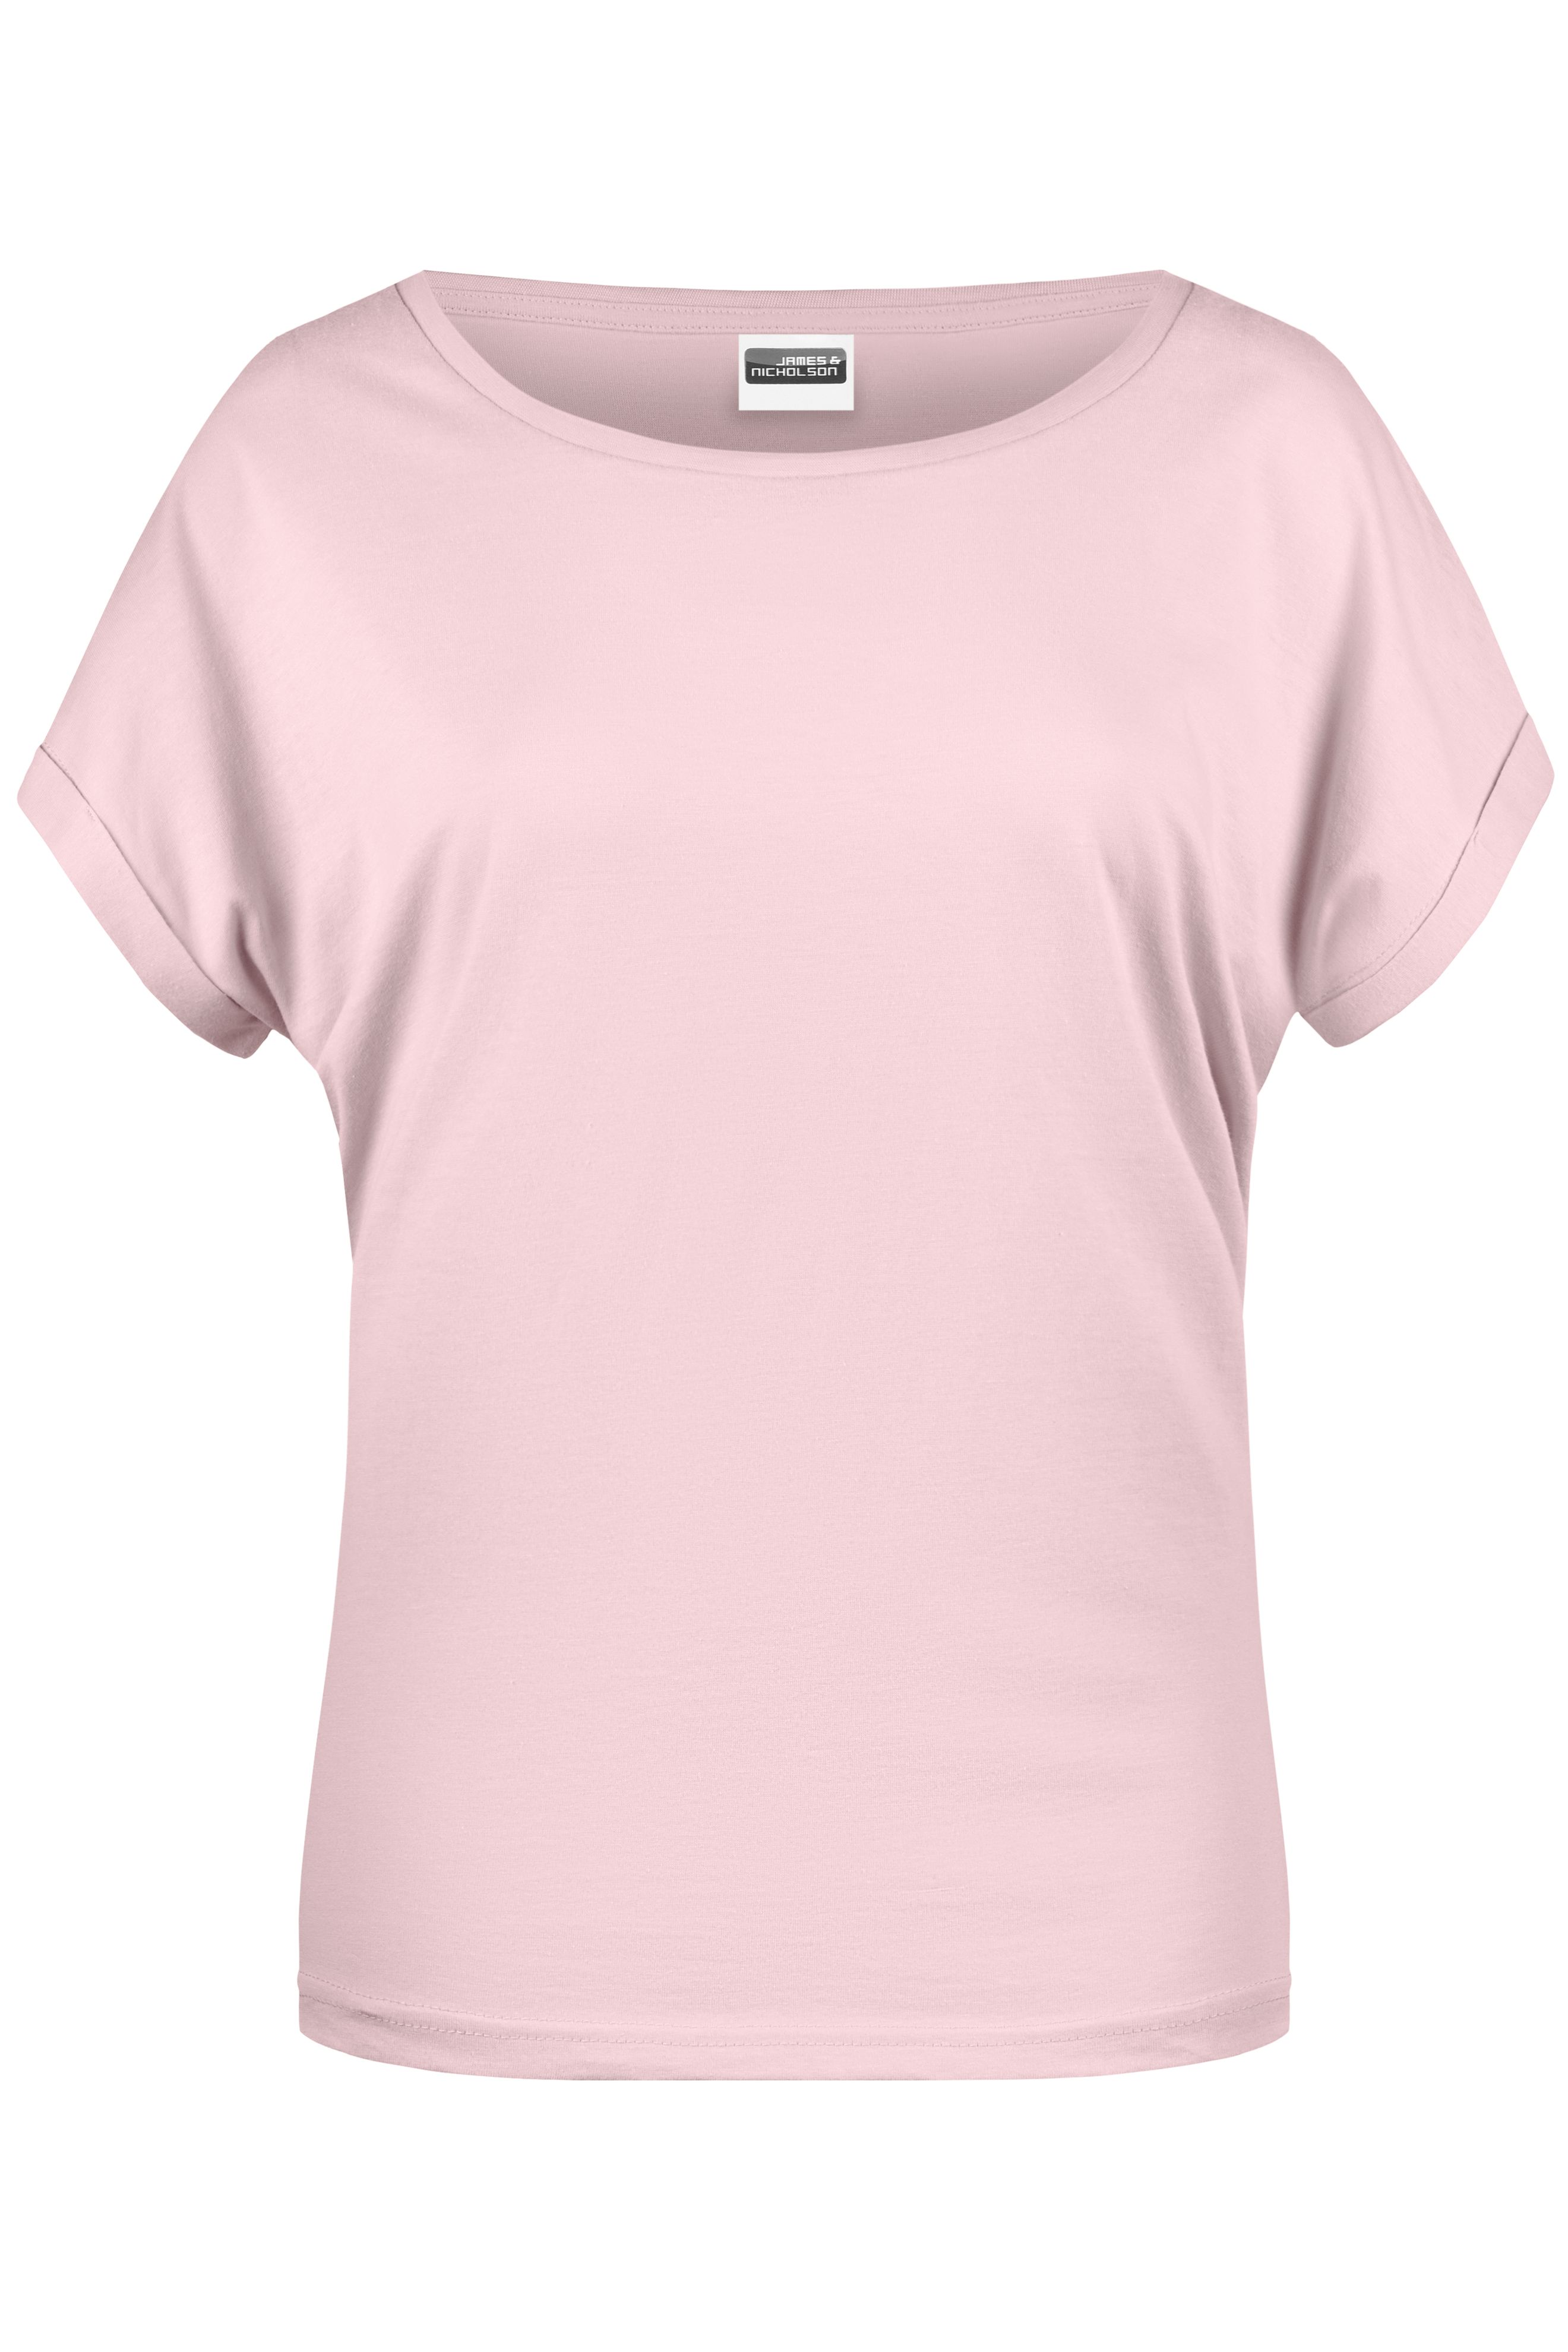 Ladies' Casual-T 8005 Damen T-Shirt in legerem Stil